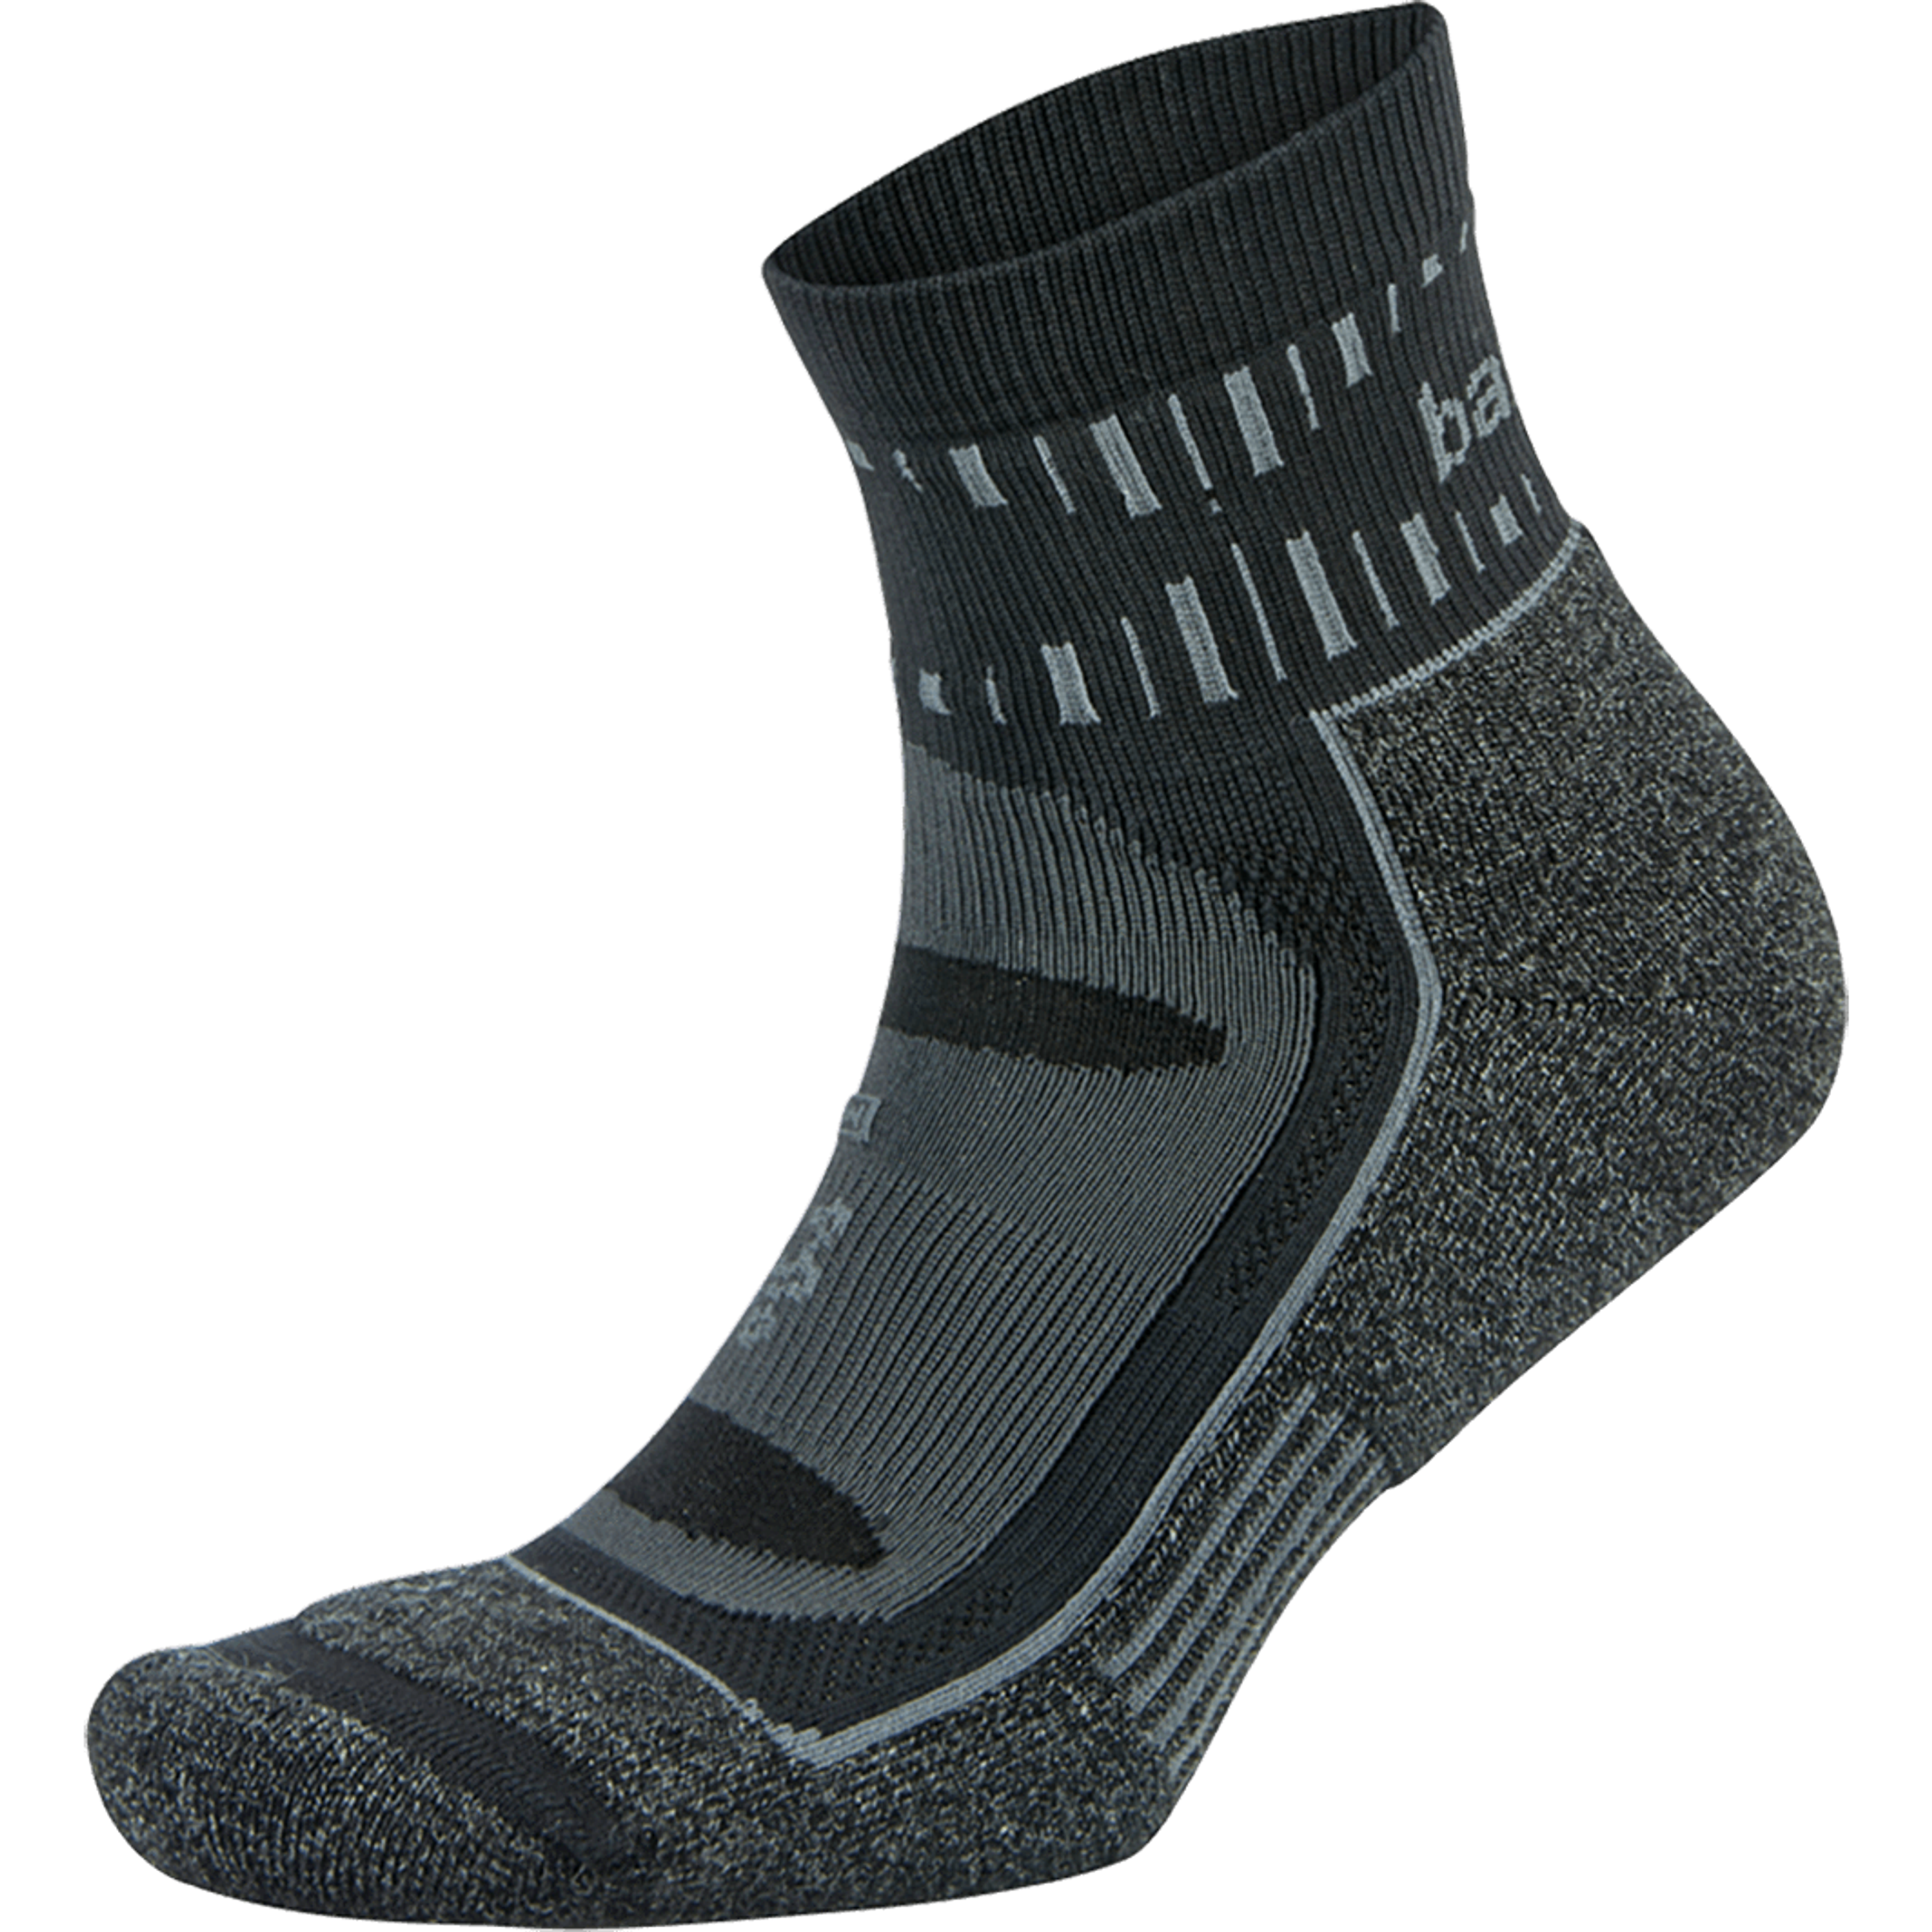 Balega Blister Resist Quarter Socks | GoBros.com